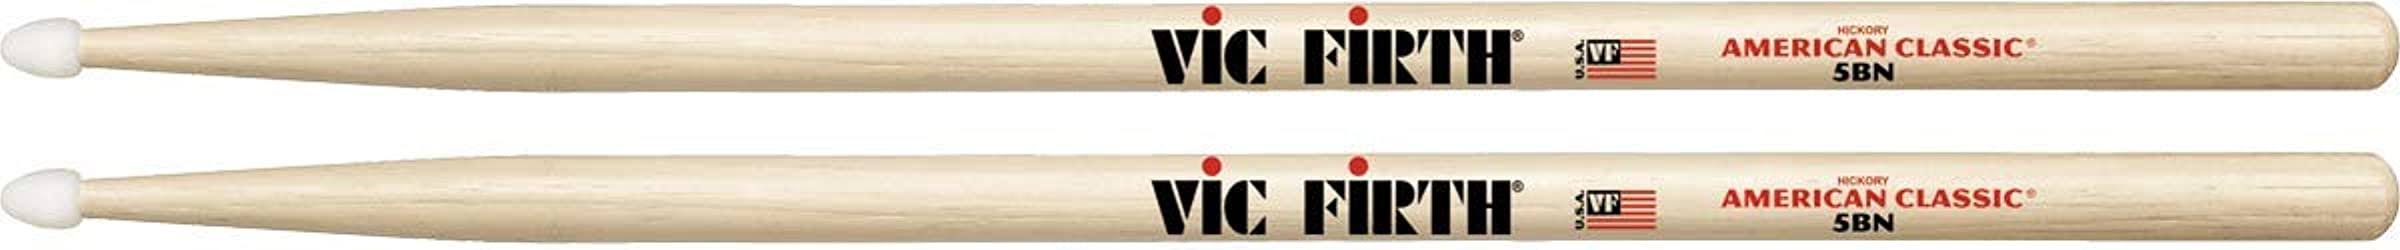 Vic Firth 5B Nylon Tip Drumsticks